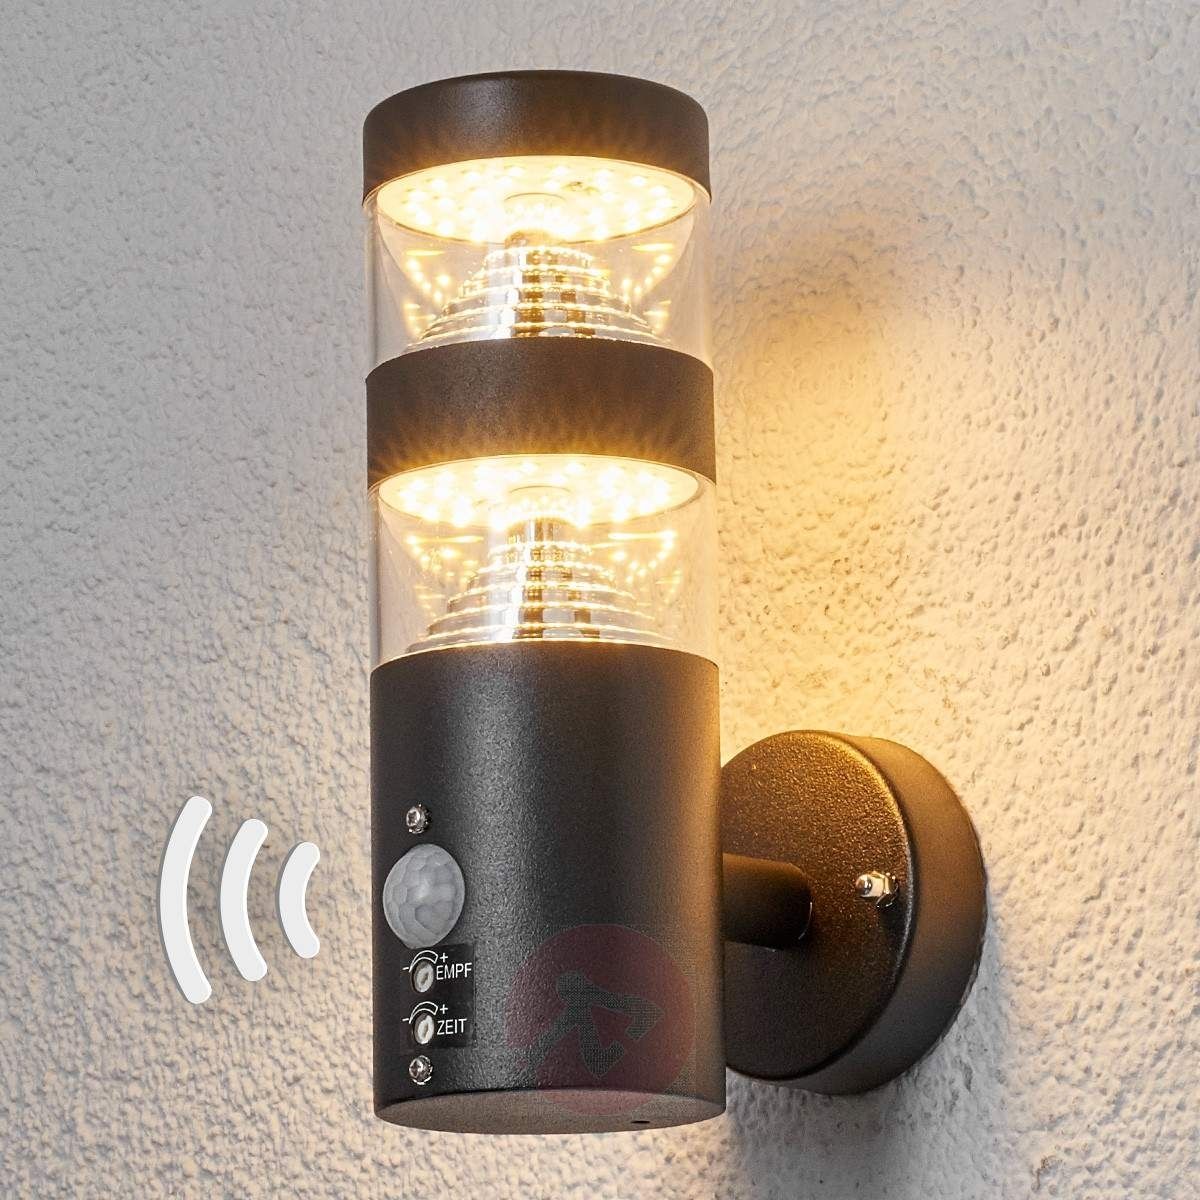 Lanea Sensor Outdoor Wall Light With Led | Lights.co.uk With Regard To Outdoor Wall Lighting With Sensor (Photo 2 of 15)